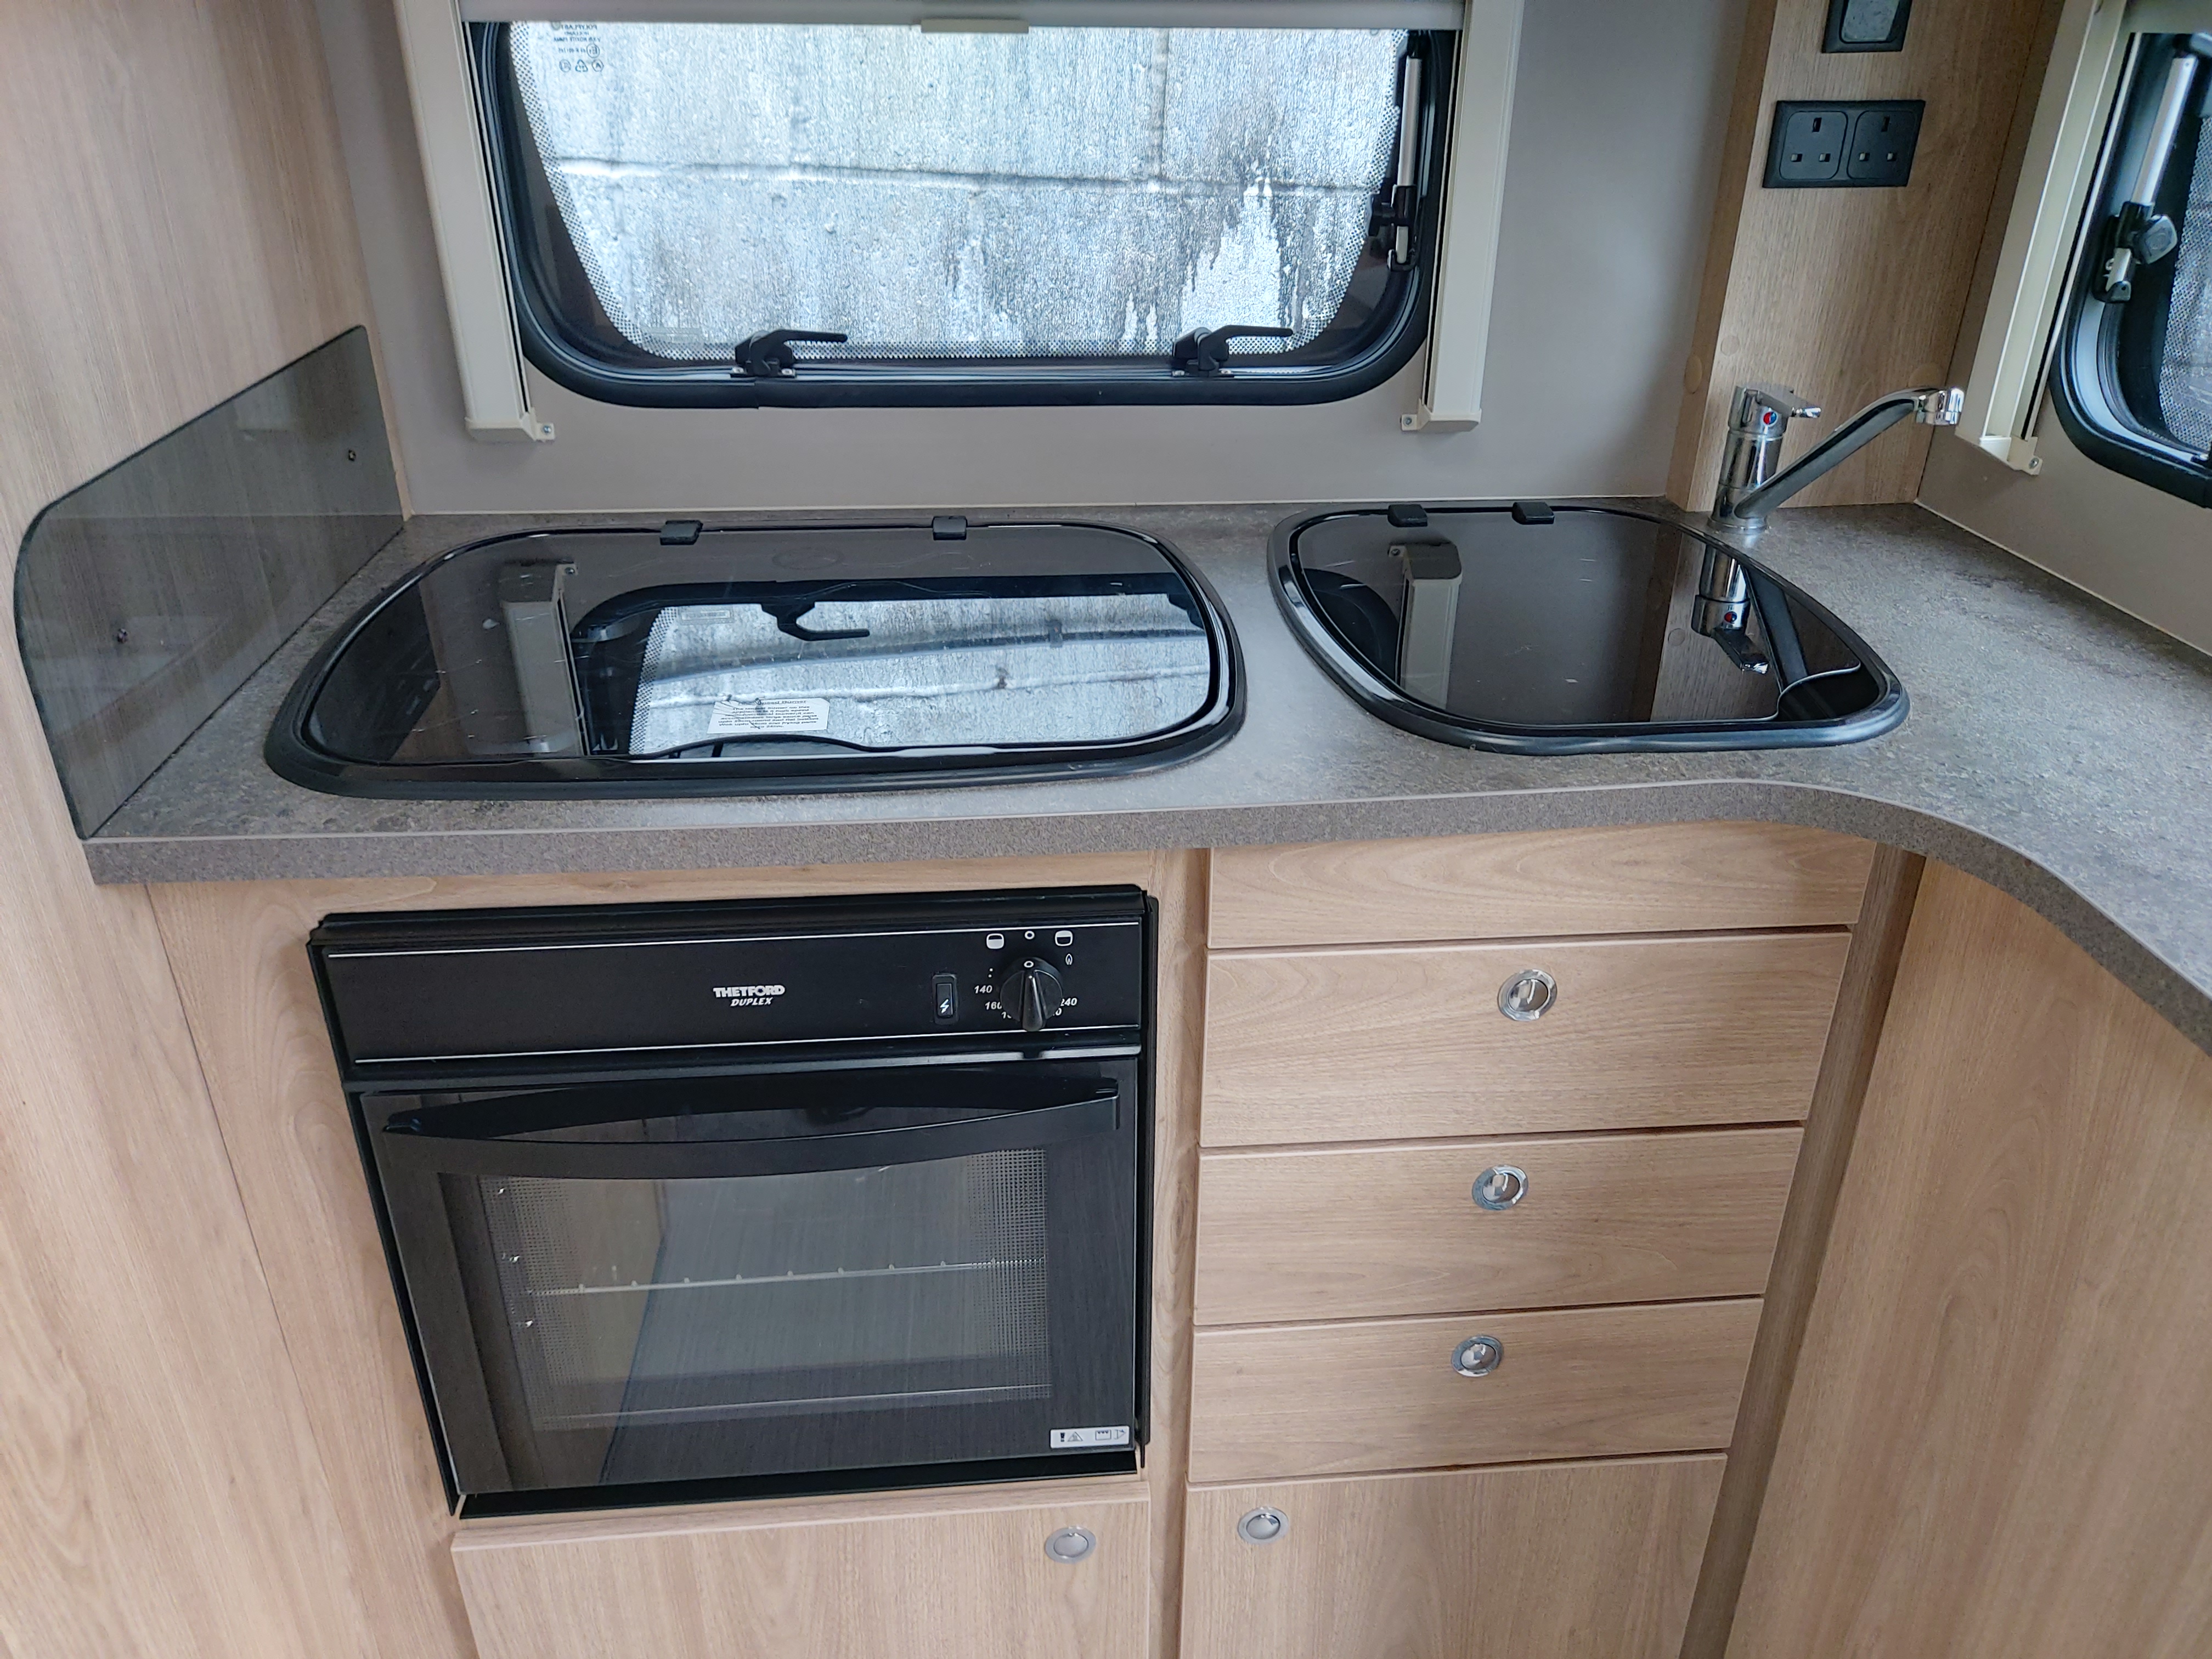 2018 Elddis Xplore 422 SOLID 2 Berth End Kitchen lightweight Caravan, Solar